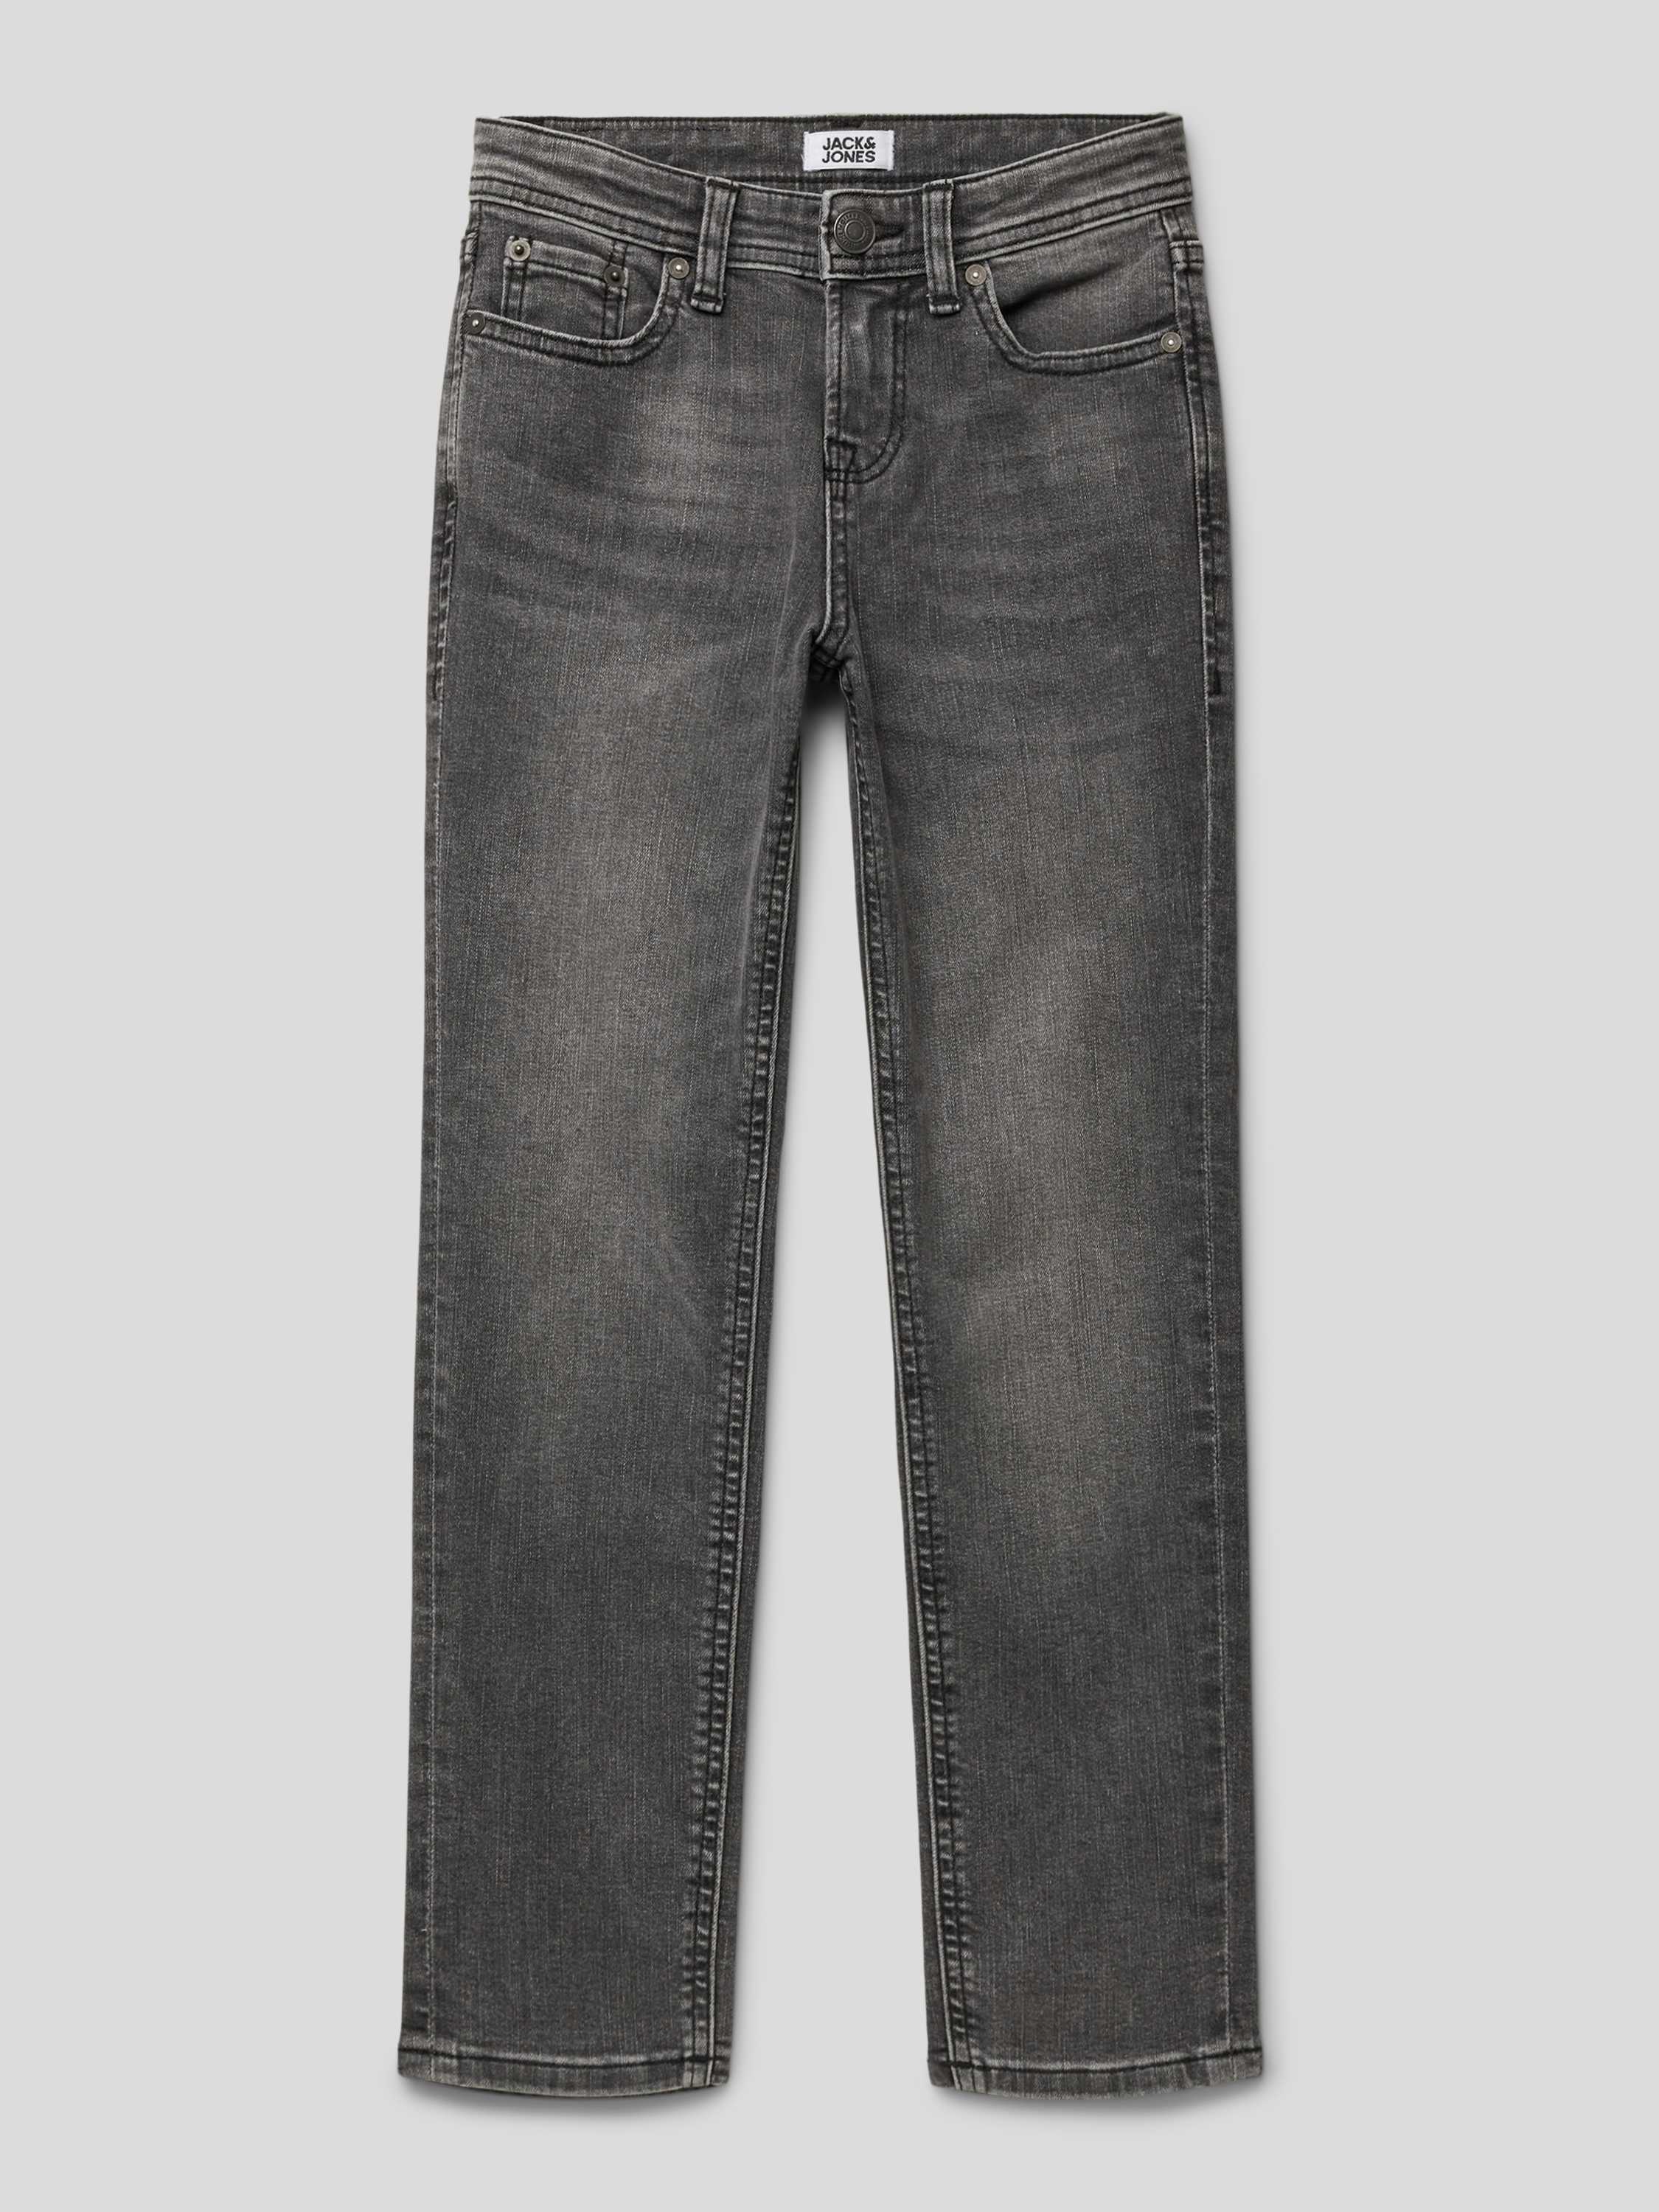 Jack & jones JUNIOR regular fit jeans JJICLARK grey denim Grijs Stretchdenim 134